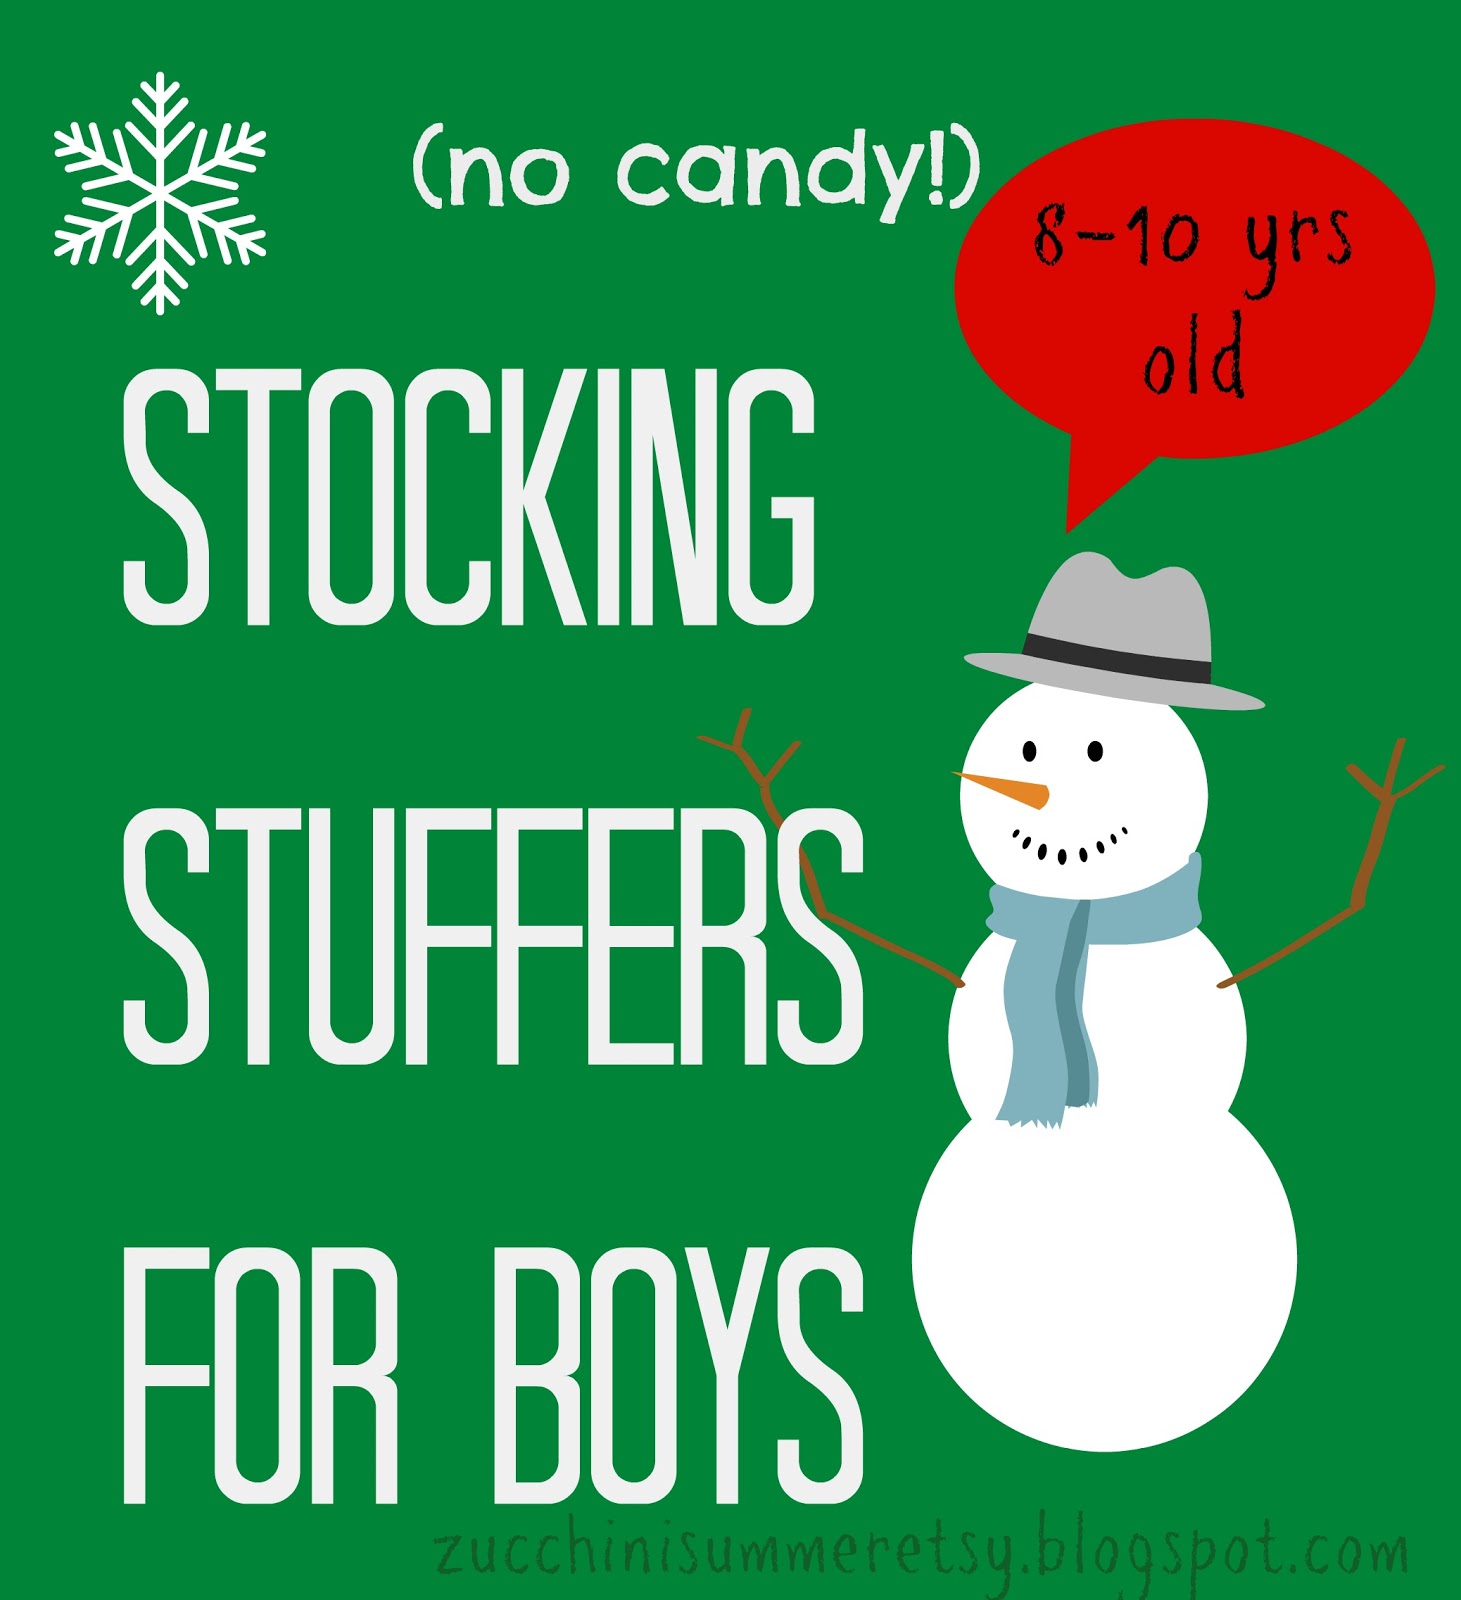 Zucchini Summer: 13 Stocking Stuffers for 8-10 yr old BOYS!